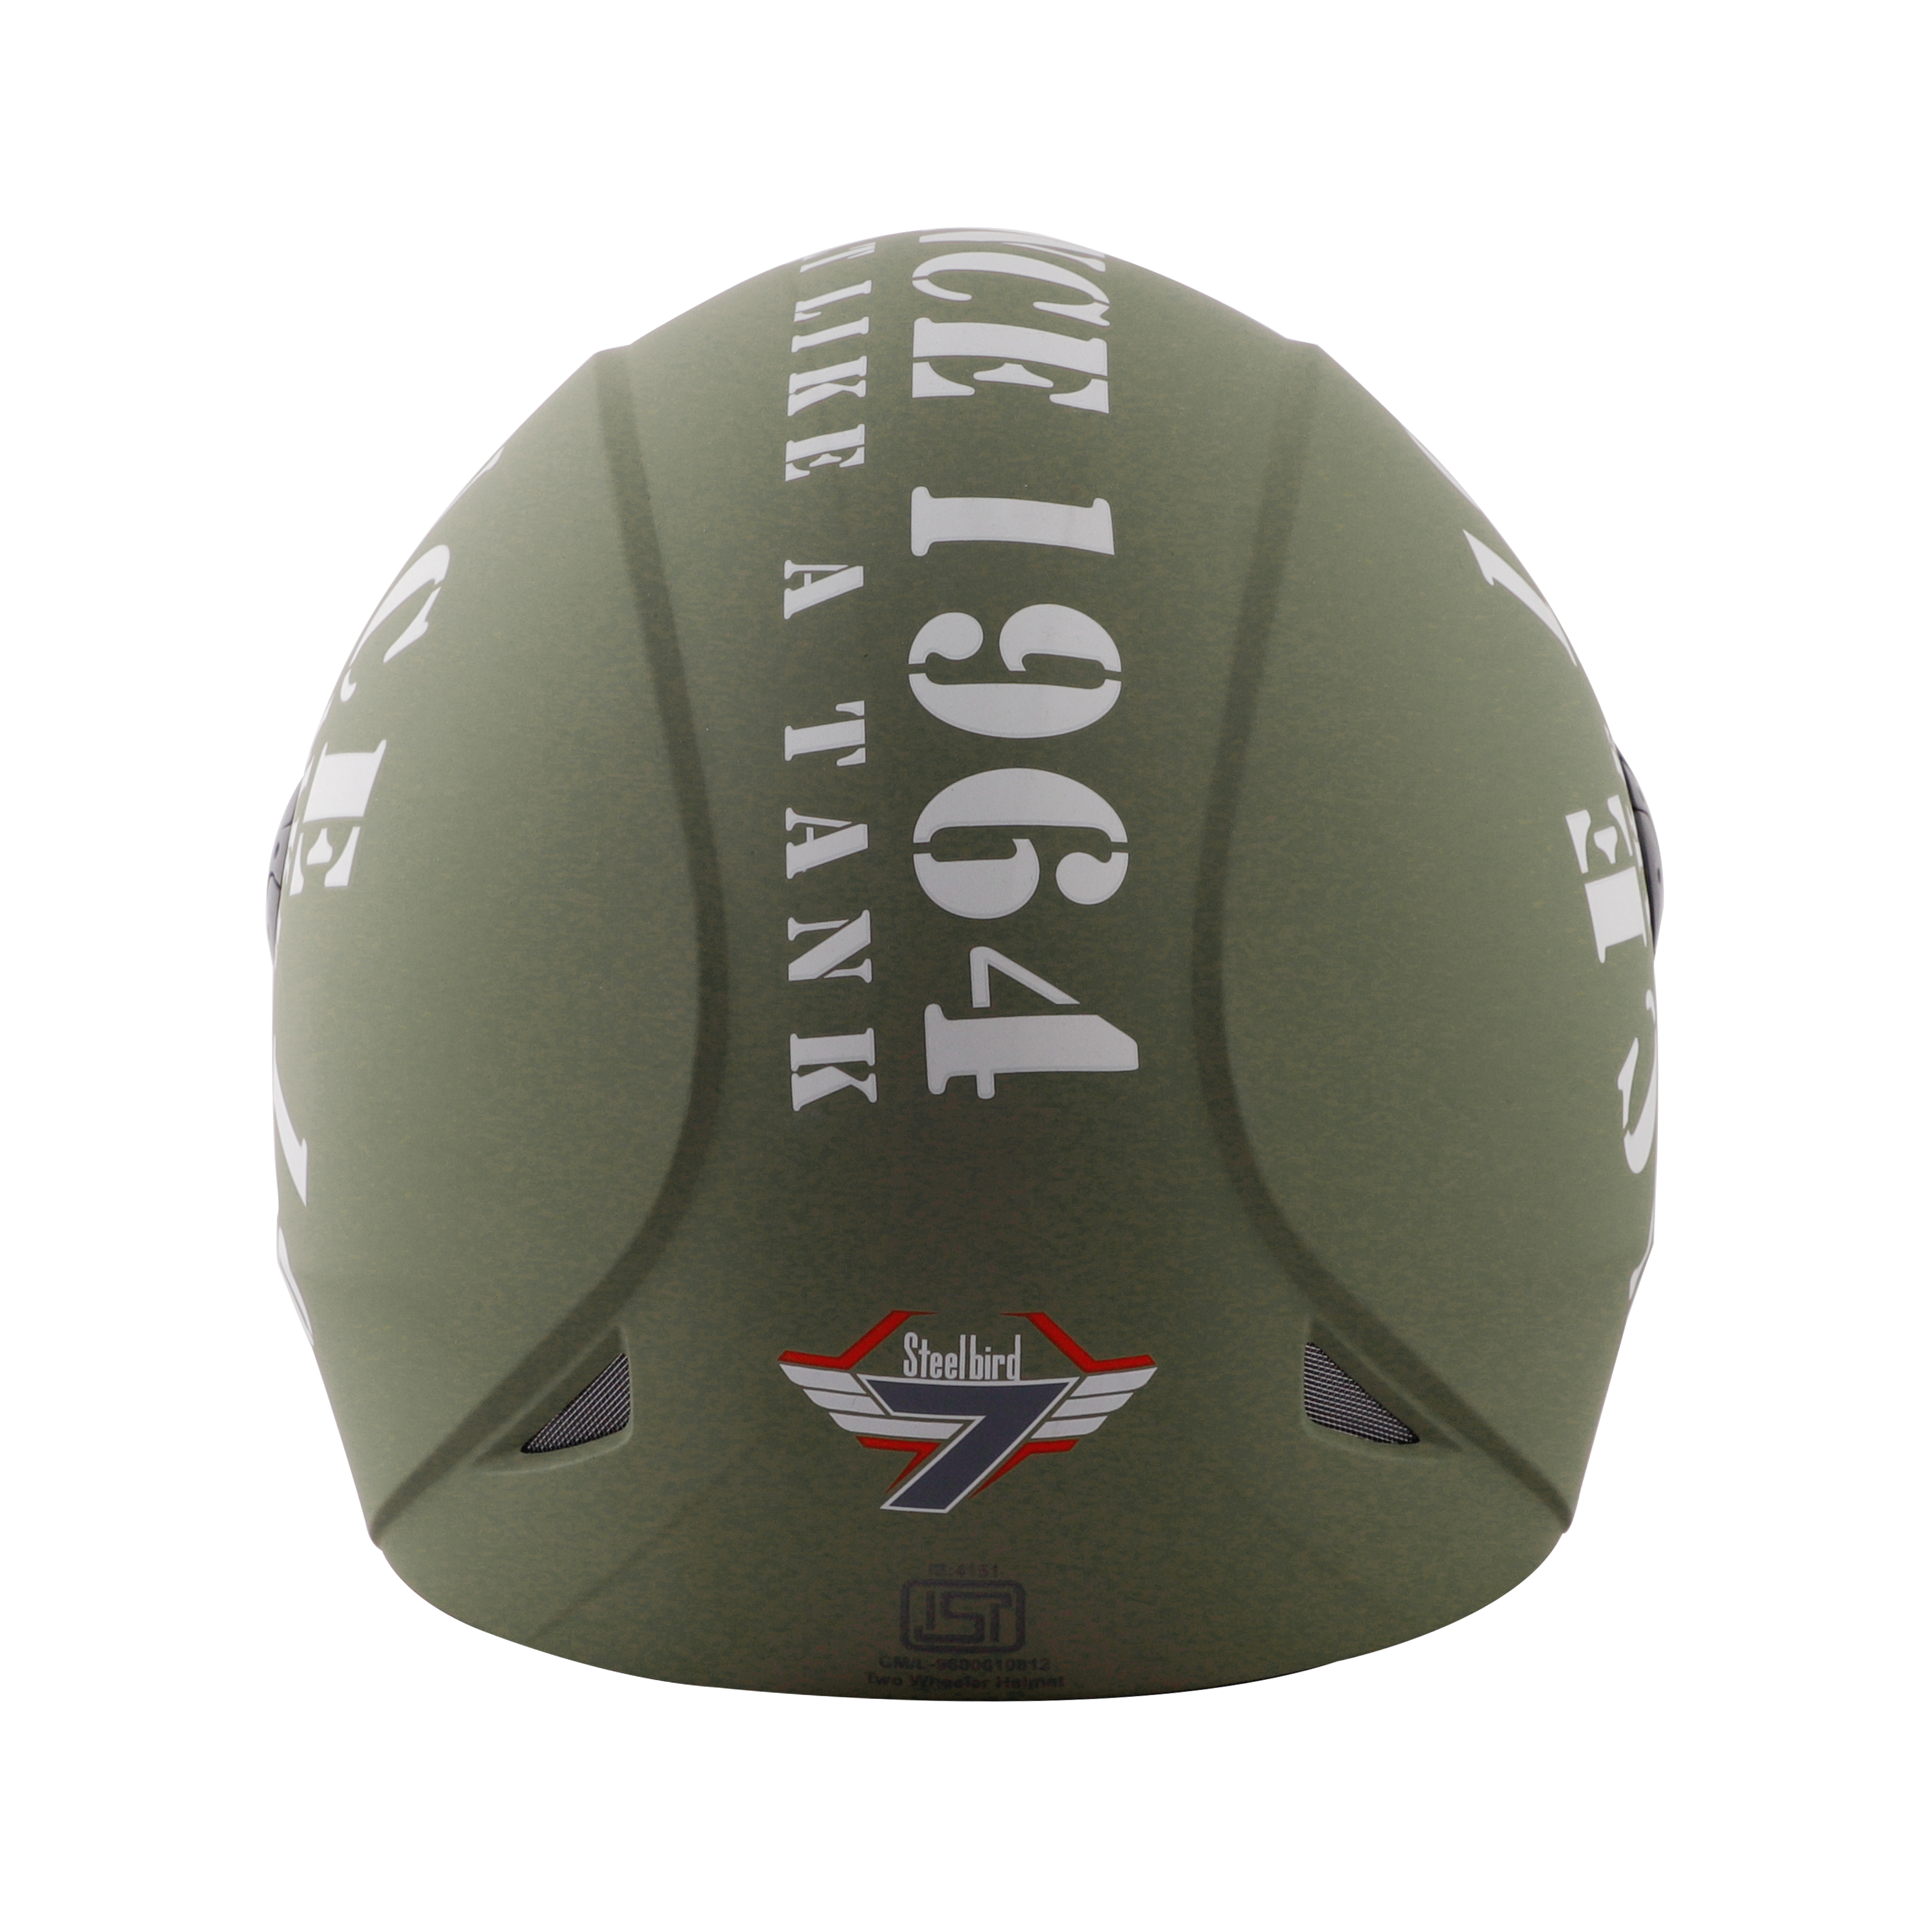 Steelbird SB-37 Zon Tank Full Face ISI Certified Graphic Helmet (Matt Battle Green White With Smoke Visor)